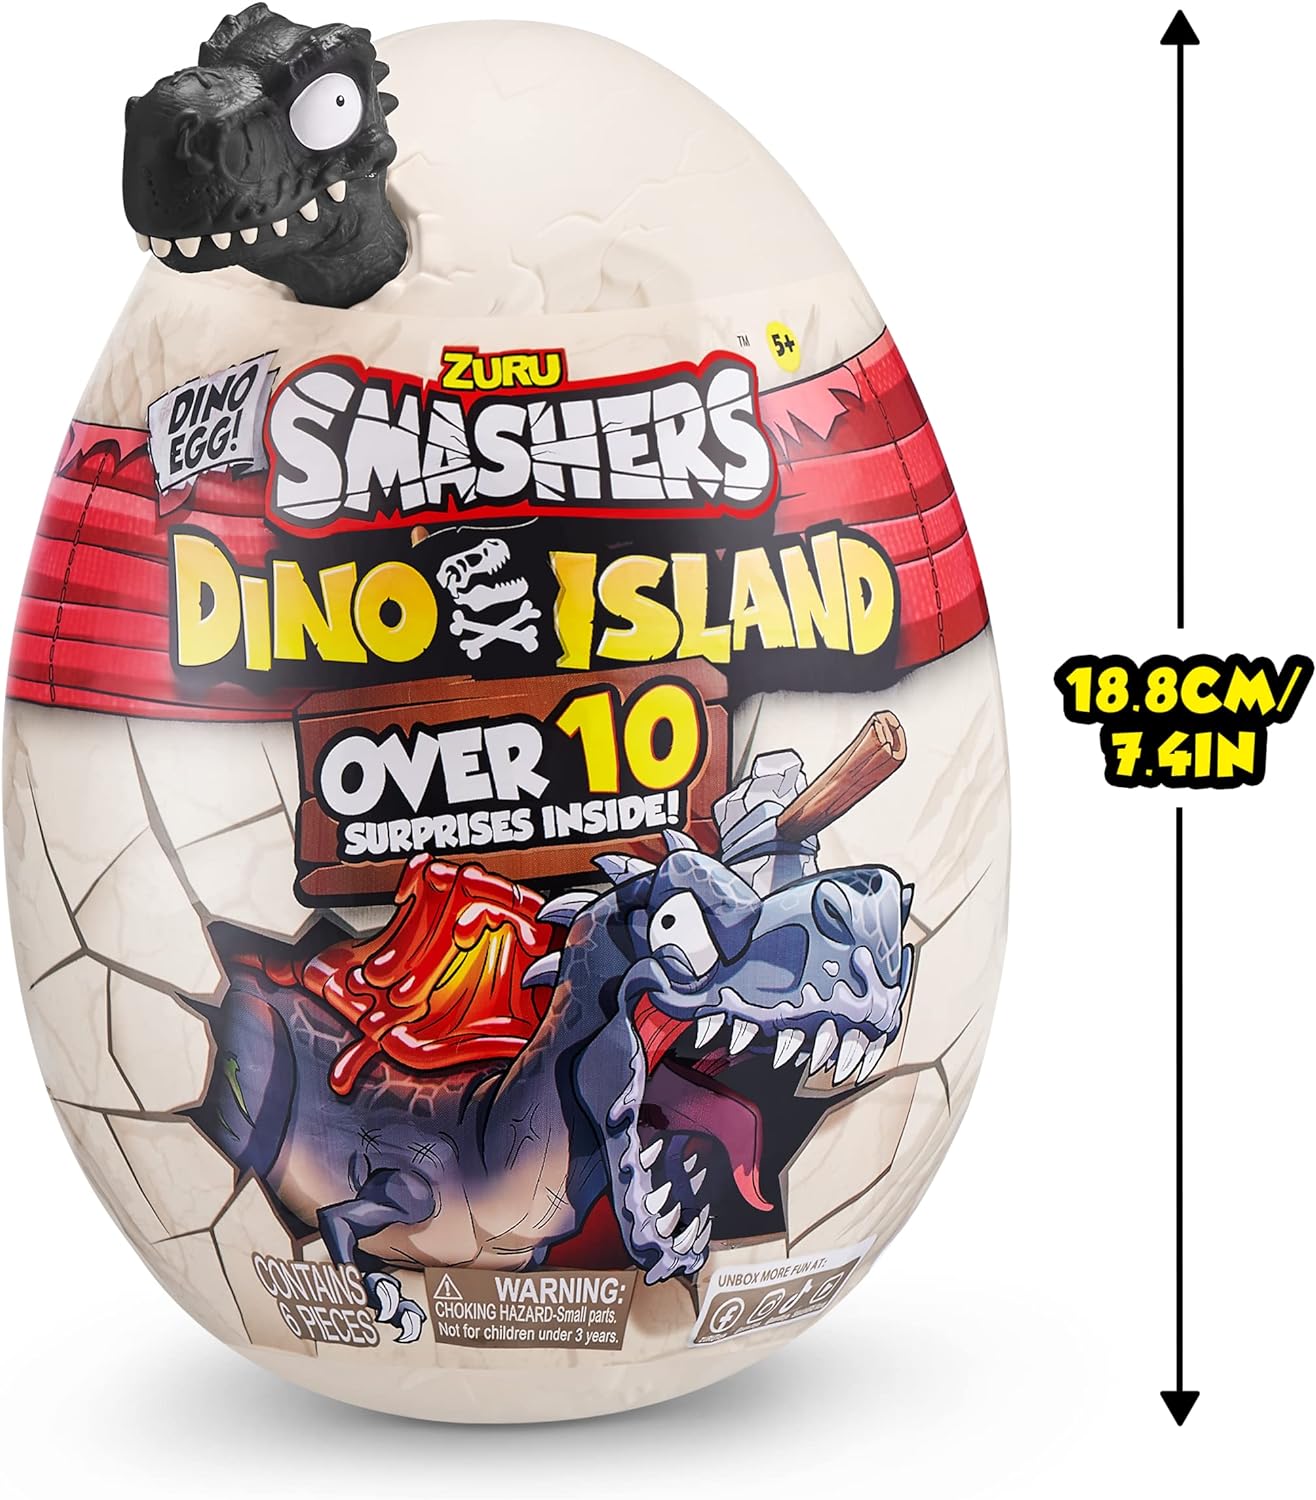 Smashers Dino Island Nano Egg (Styles Vary)